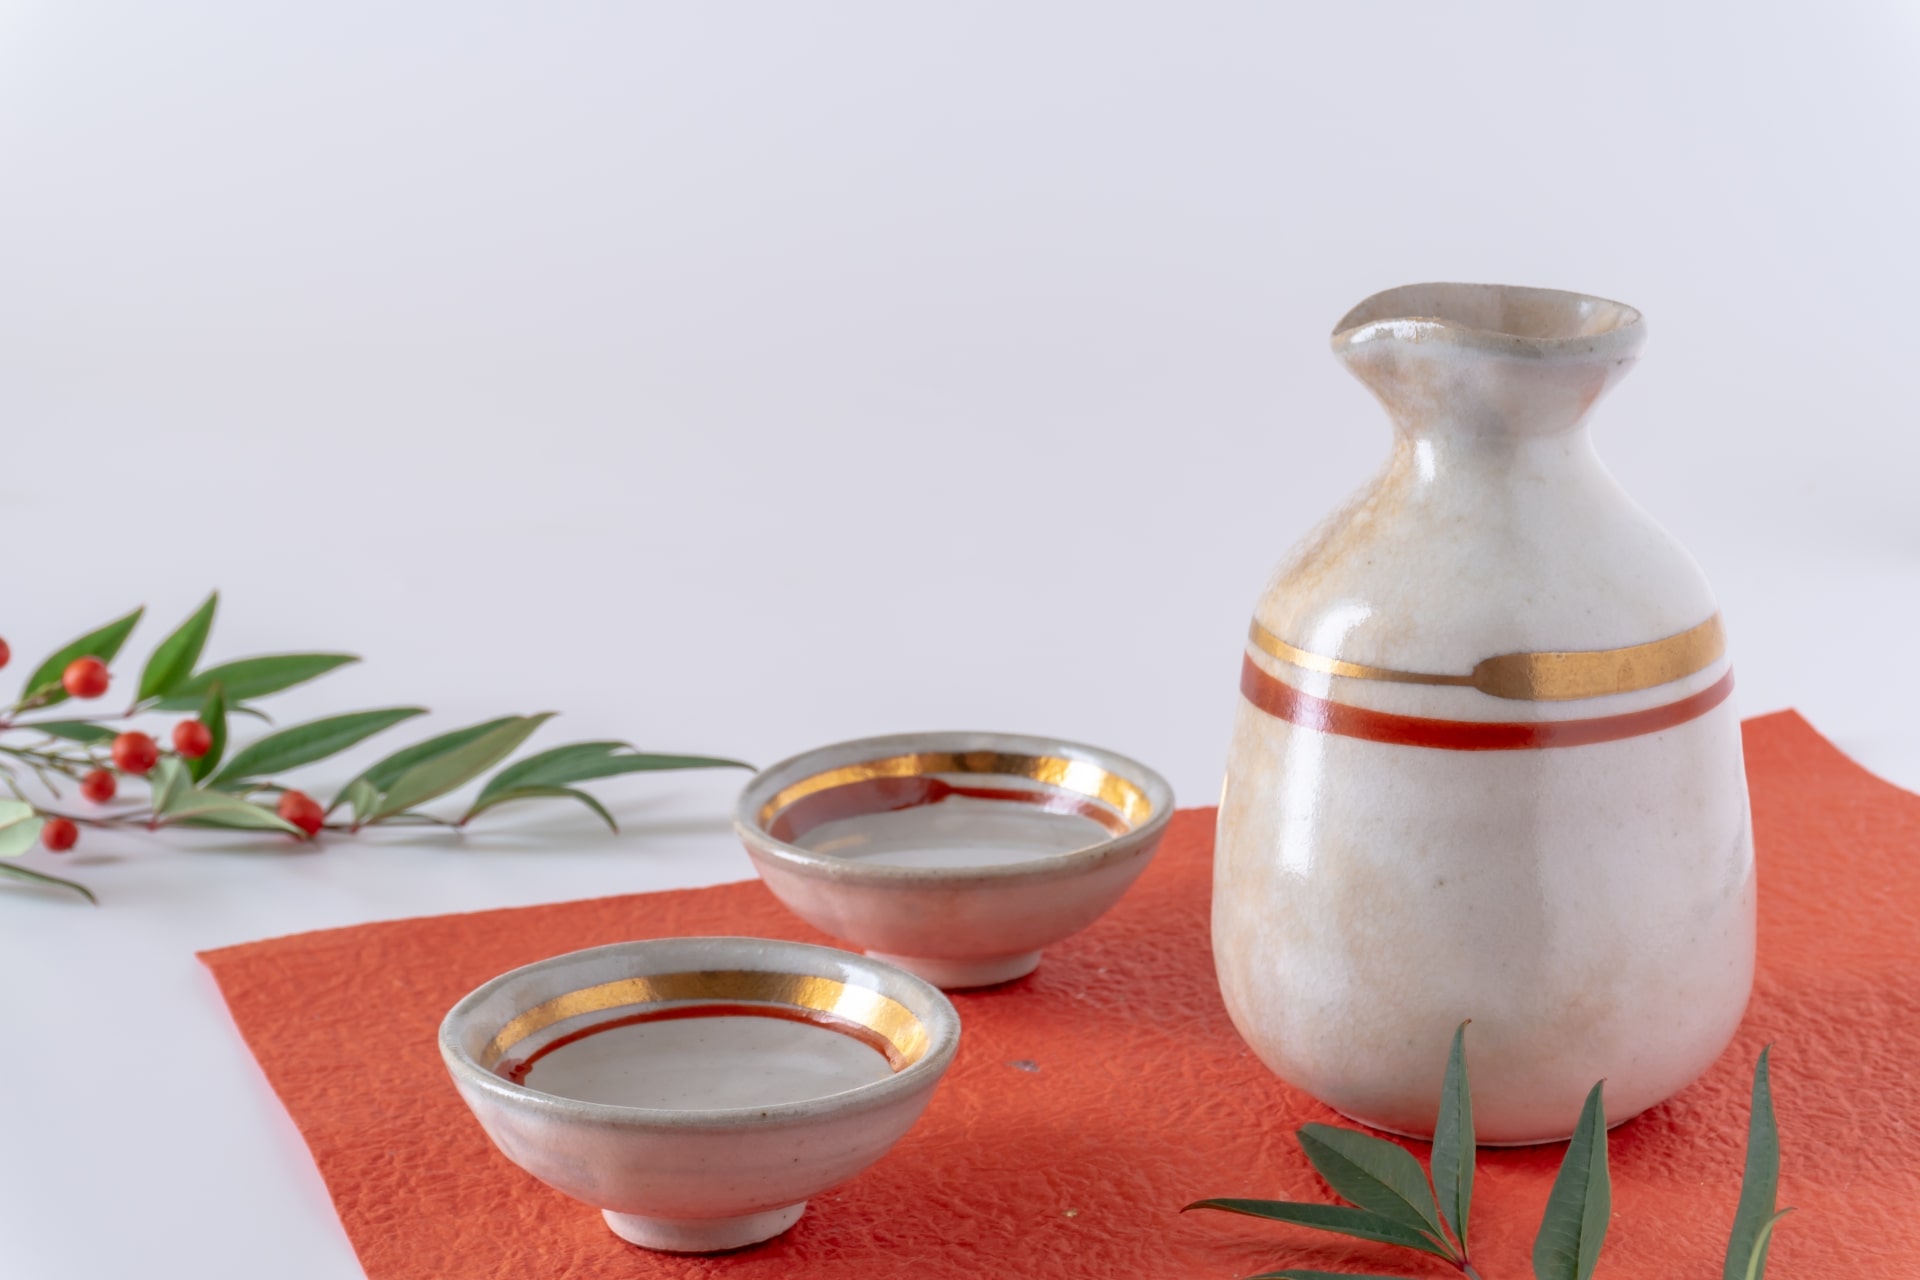 Porcelain sake cup